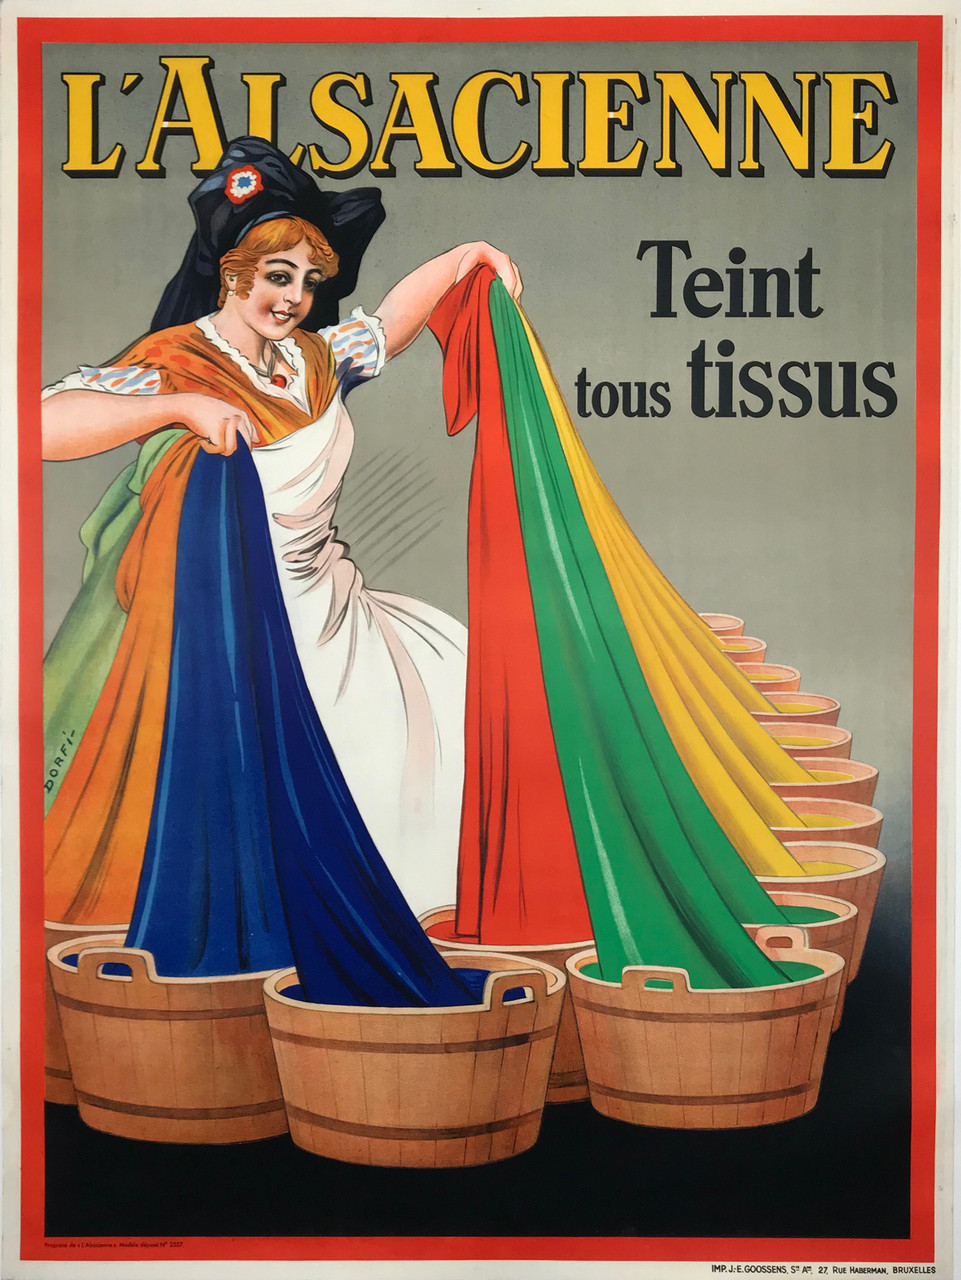 L'Alsacienne Teint tous Tissus Original 1926 Belgium Vintage Poster by Dorfinant (Dorfi). Linen Backed